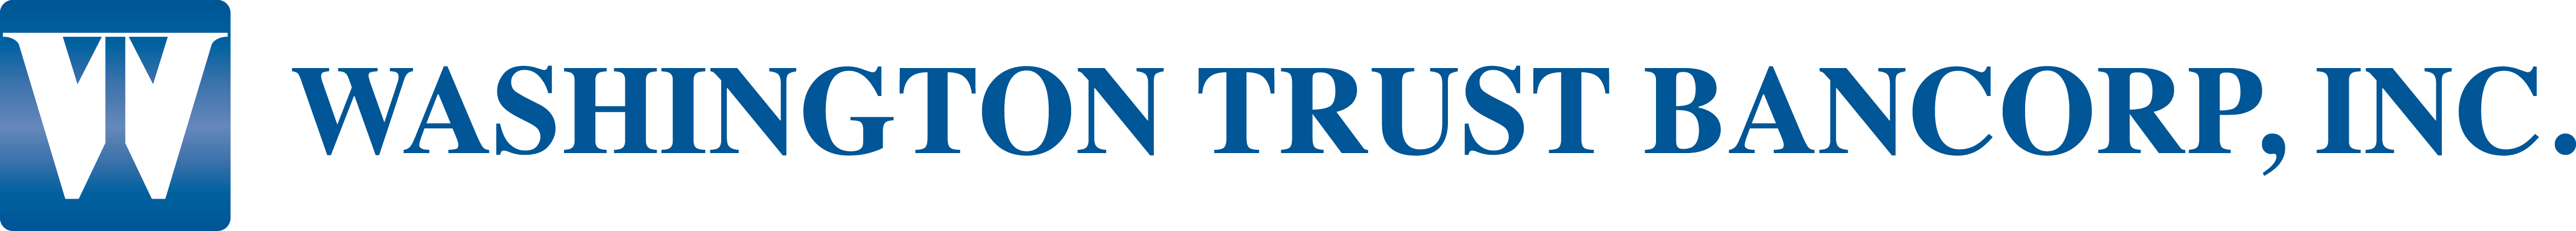 Bancorp Logo - Corporate Profile The Washington Trust